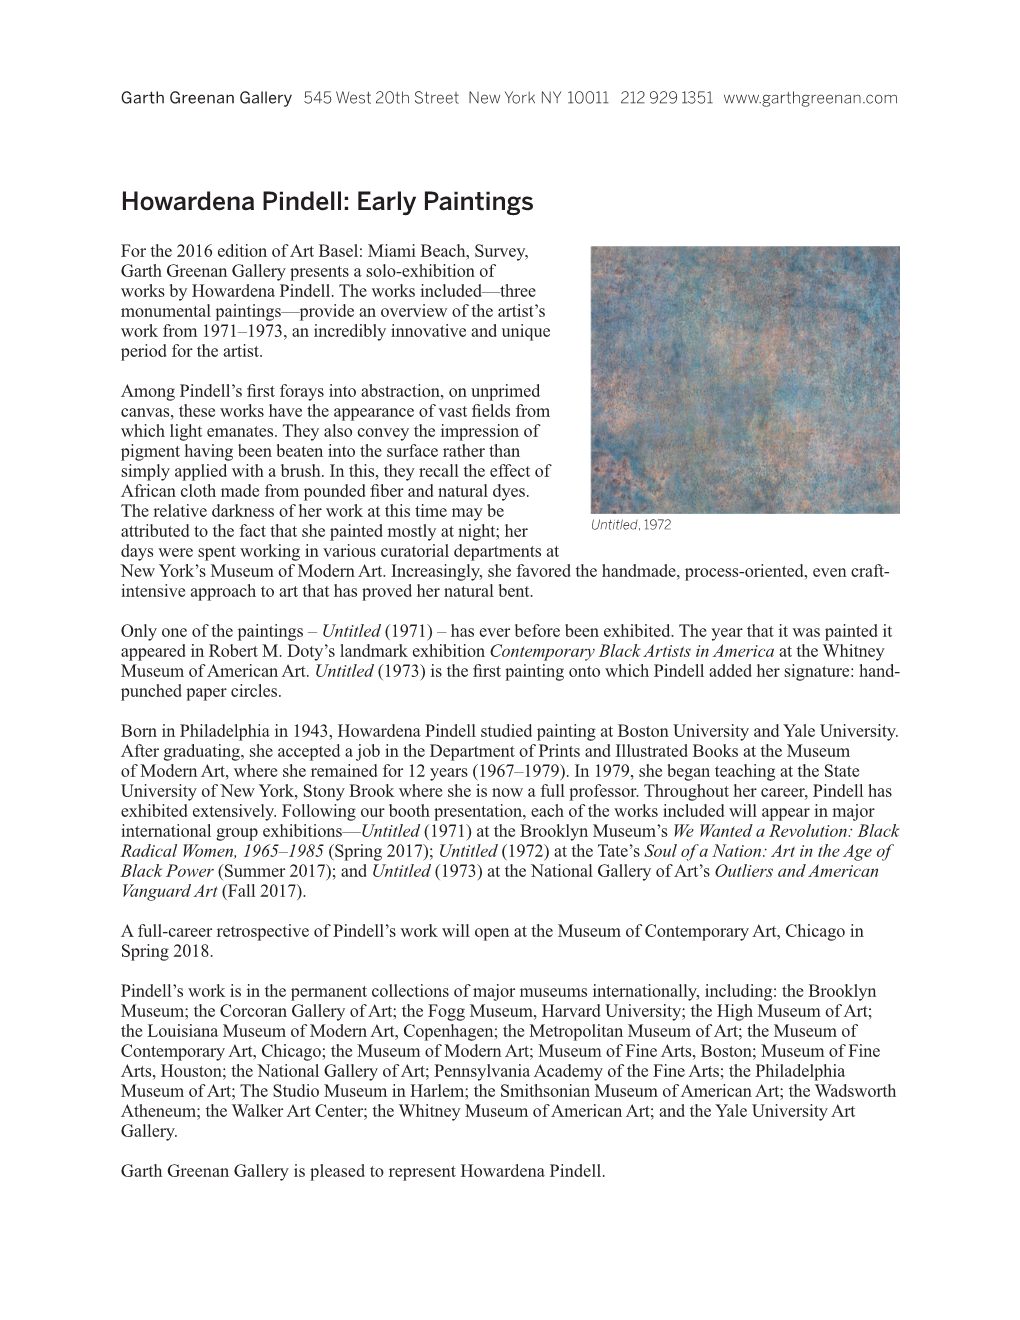 Howardena Pindell: Early Paintings